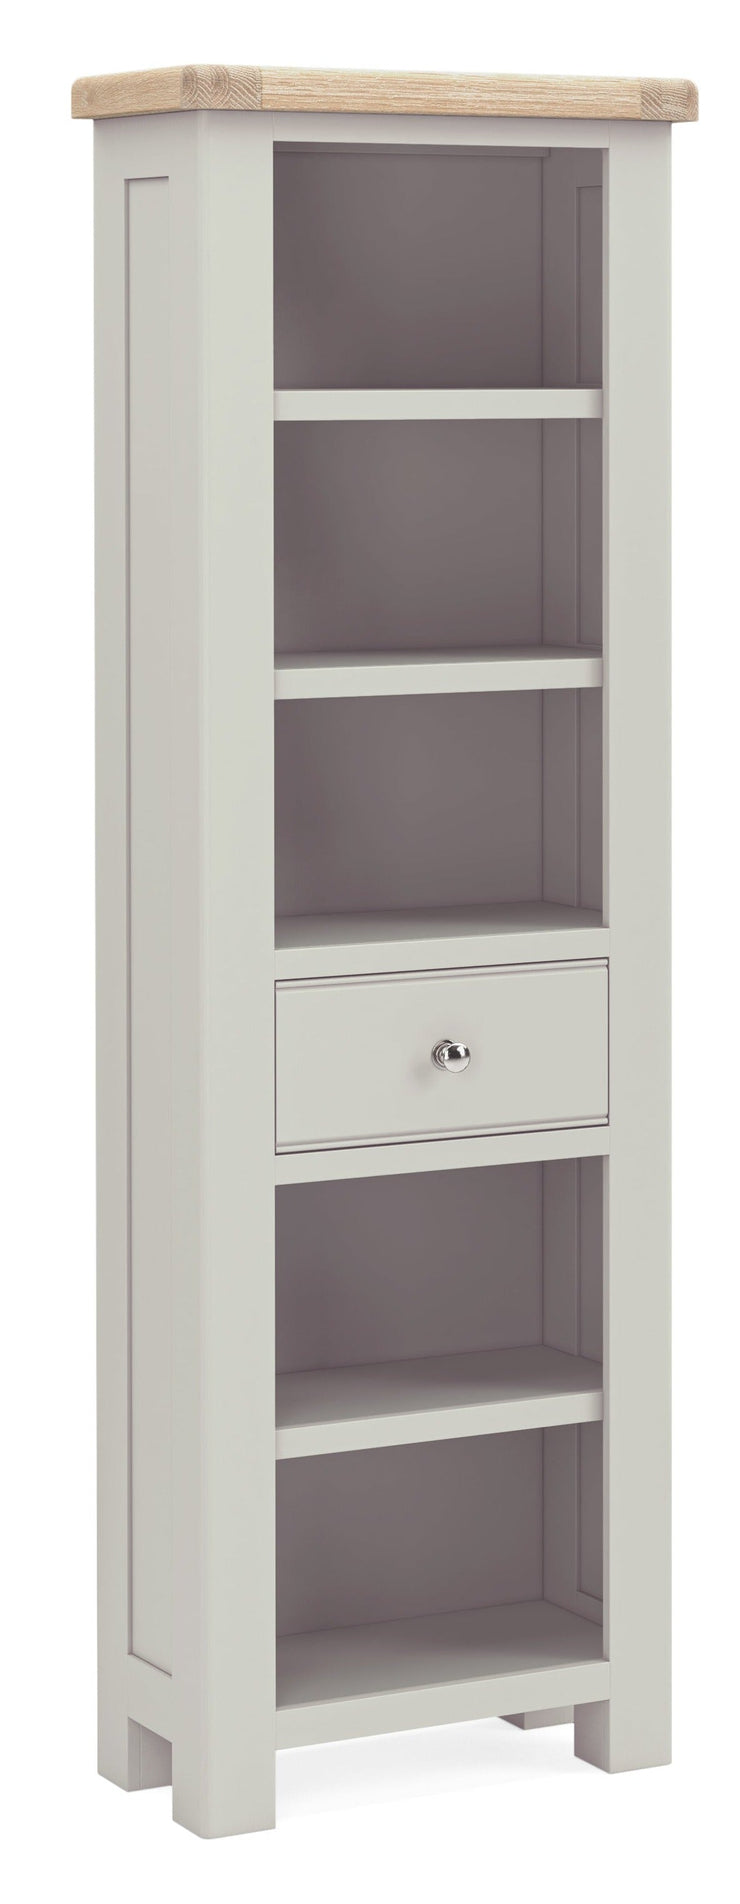 Chatsworth - Stone Grey Slim 1 Drawer Bookcase